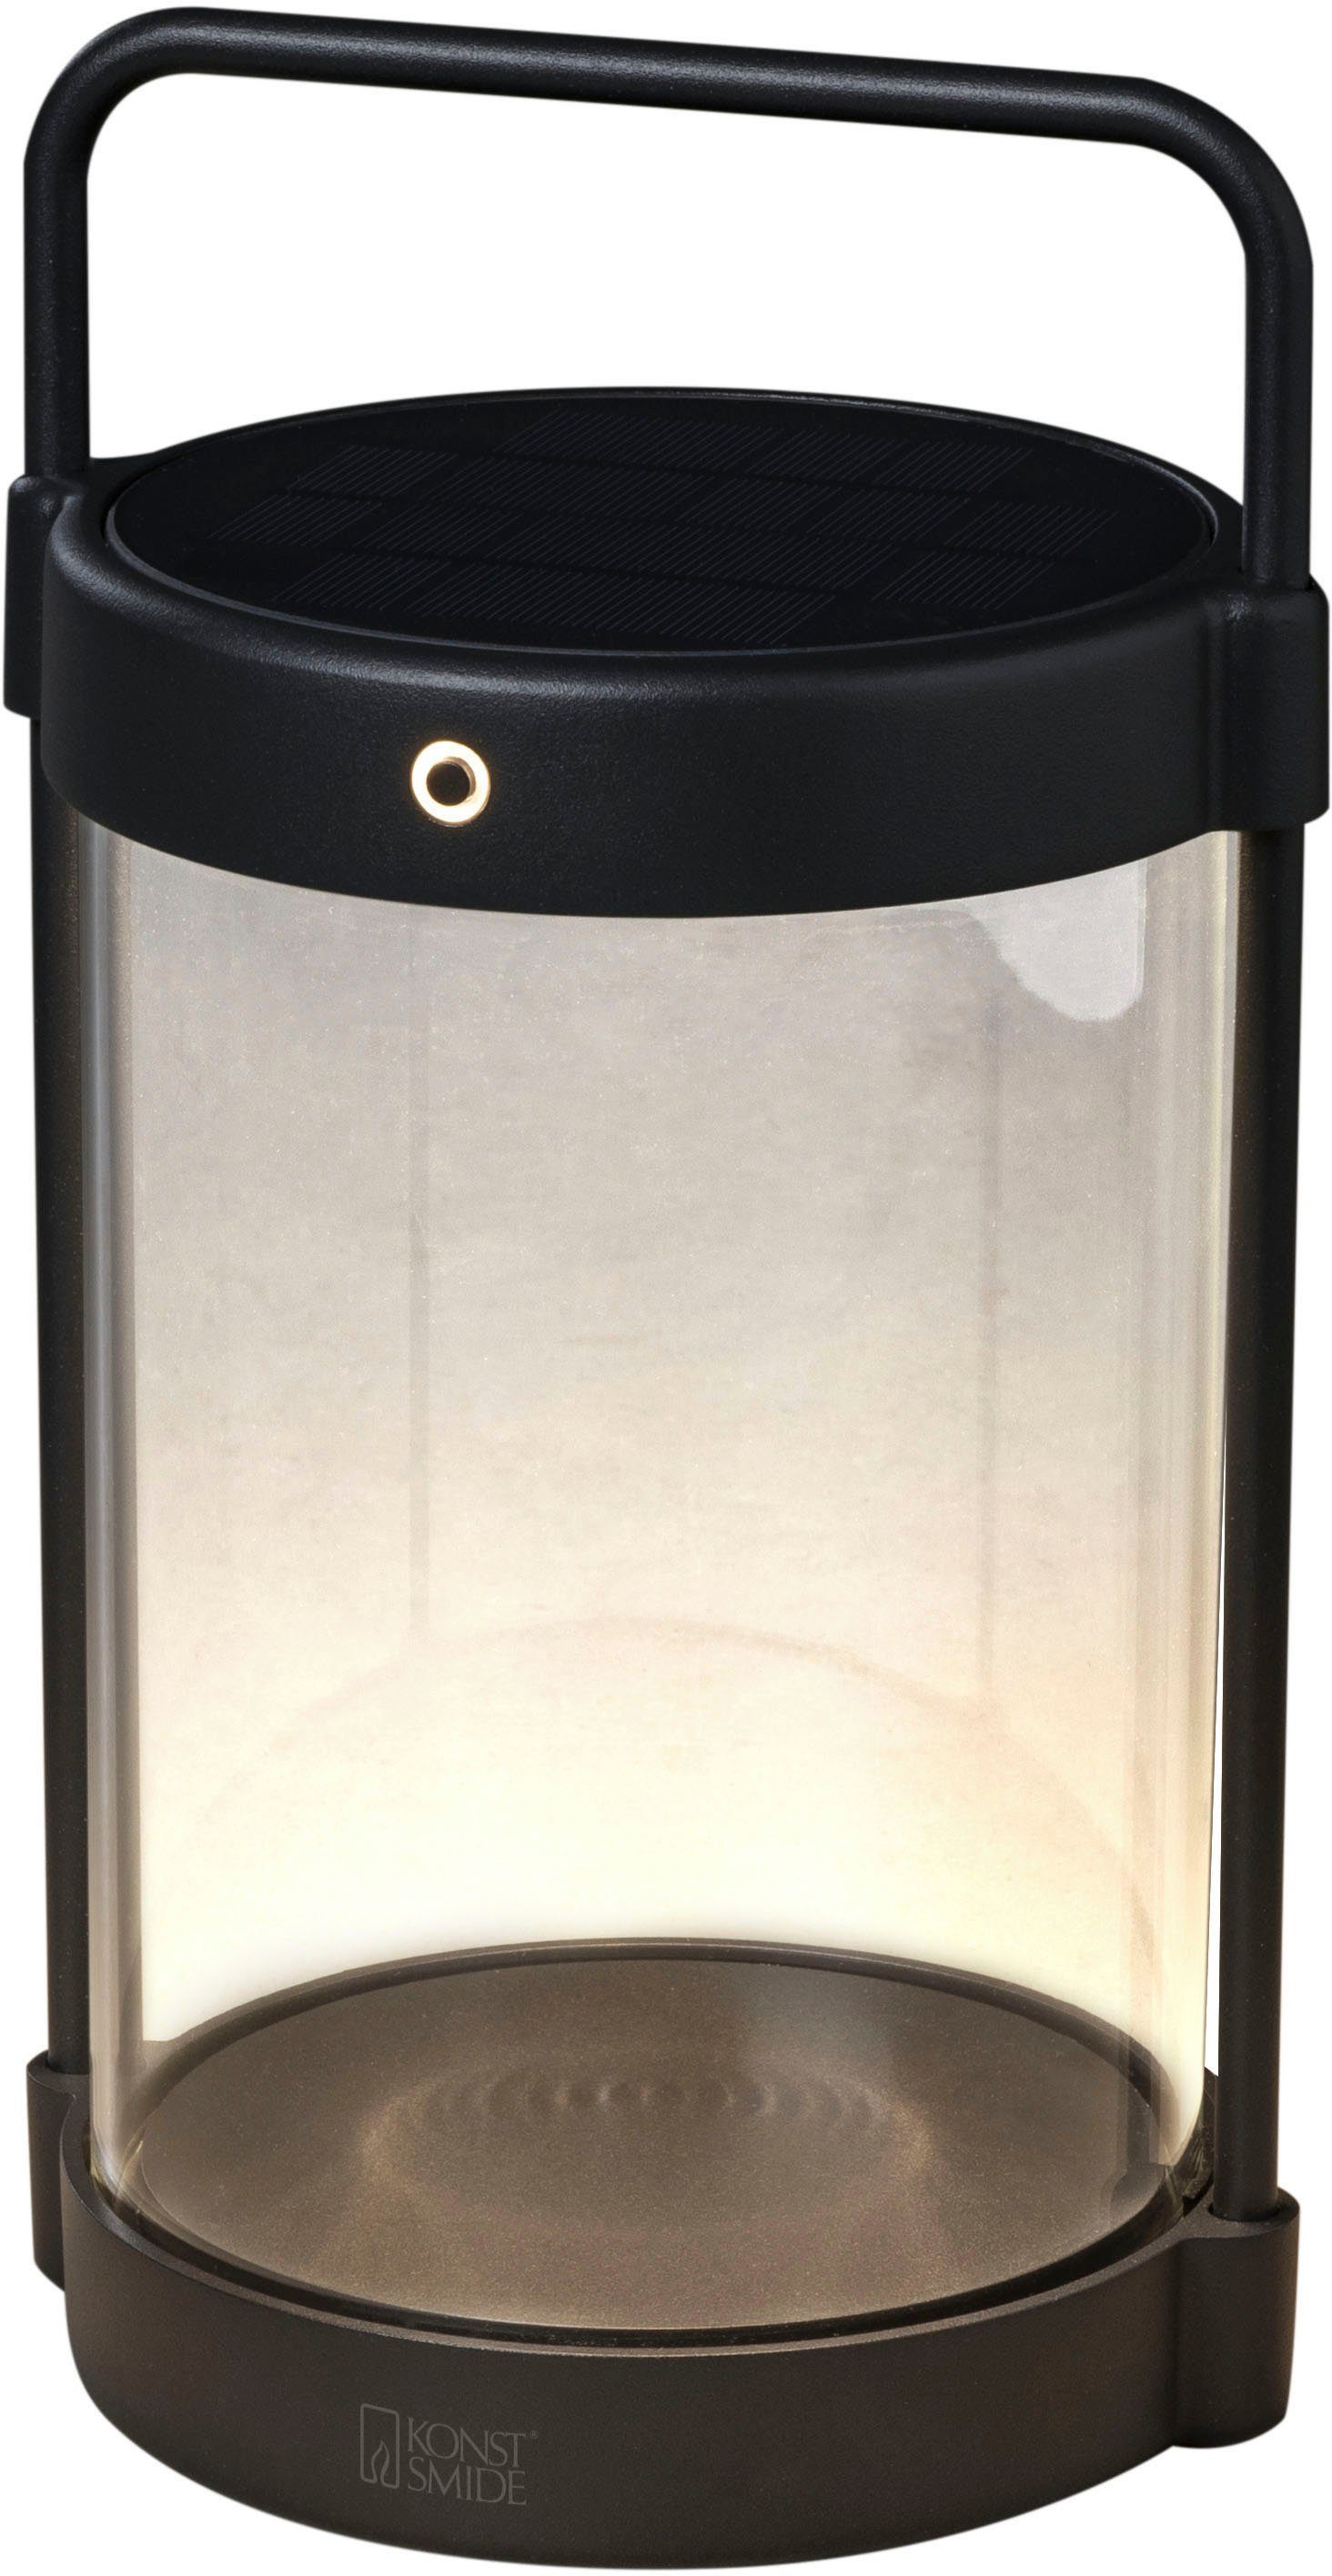 KONSTSMIDE LED Laterne Crotone, Dammerungs dimmbar, schwarz, LED LED Crotone integriert, Warmweiß, fest Solar/USB-Laterne